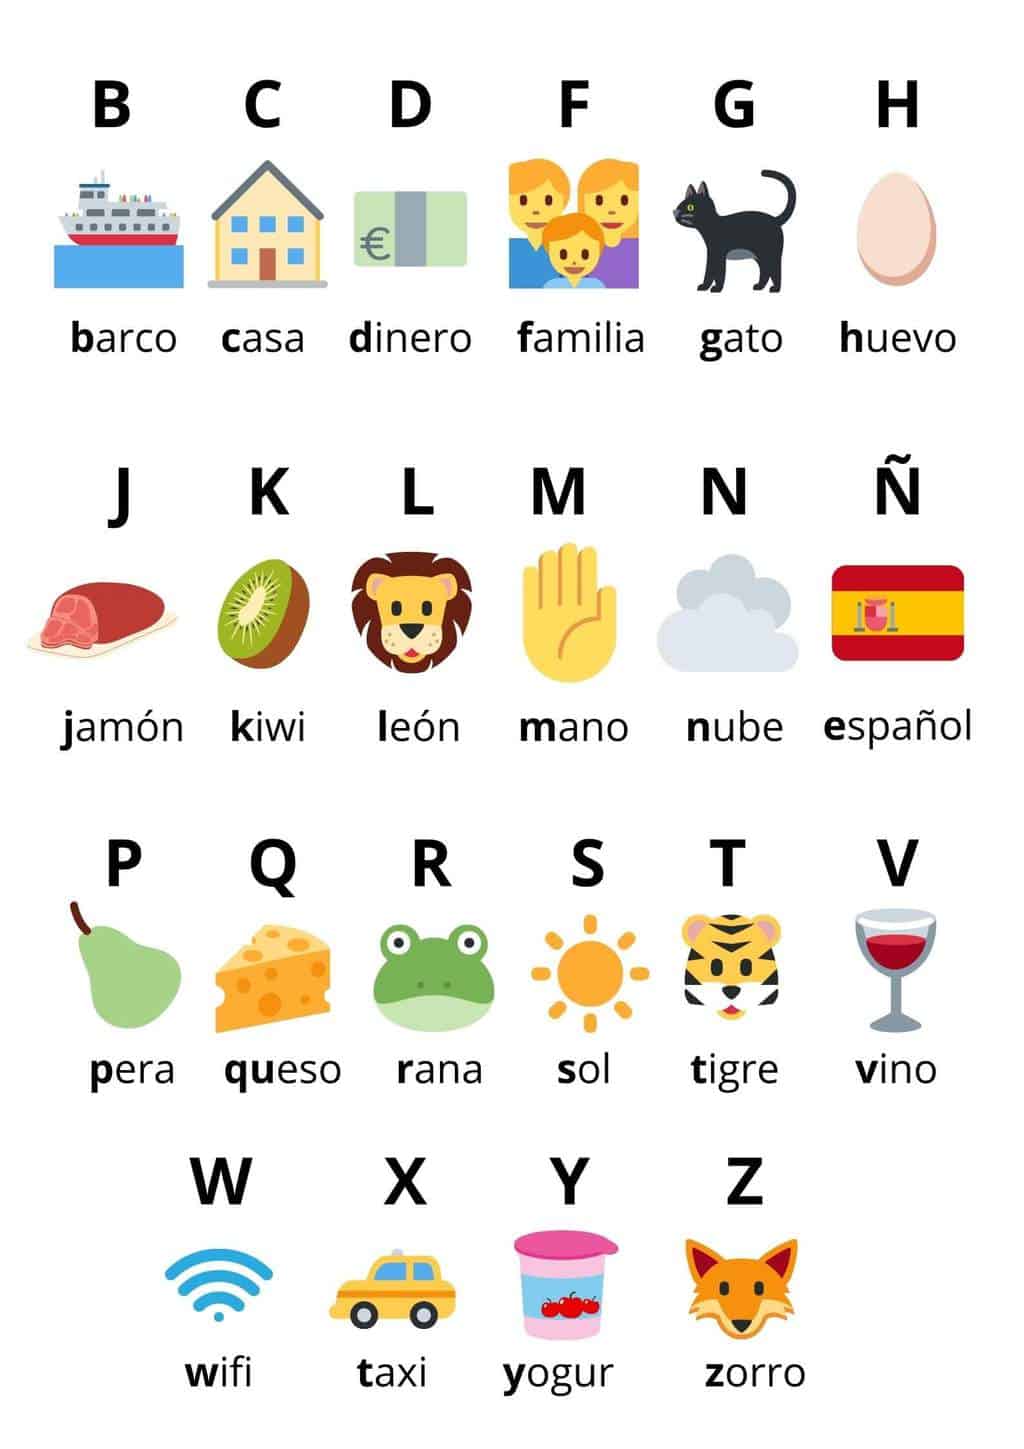 Spanish Phonetic Alphabet